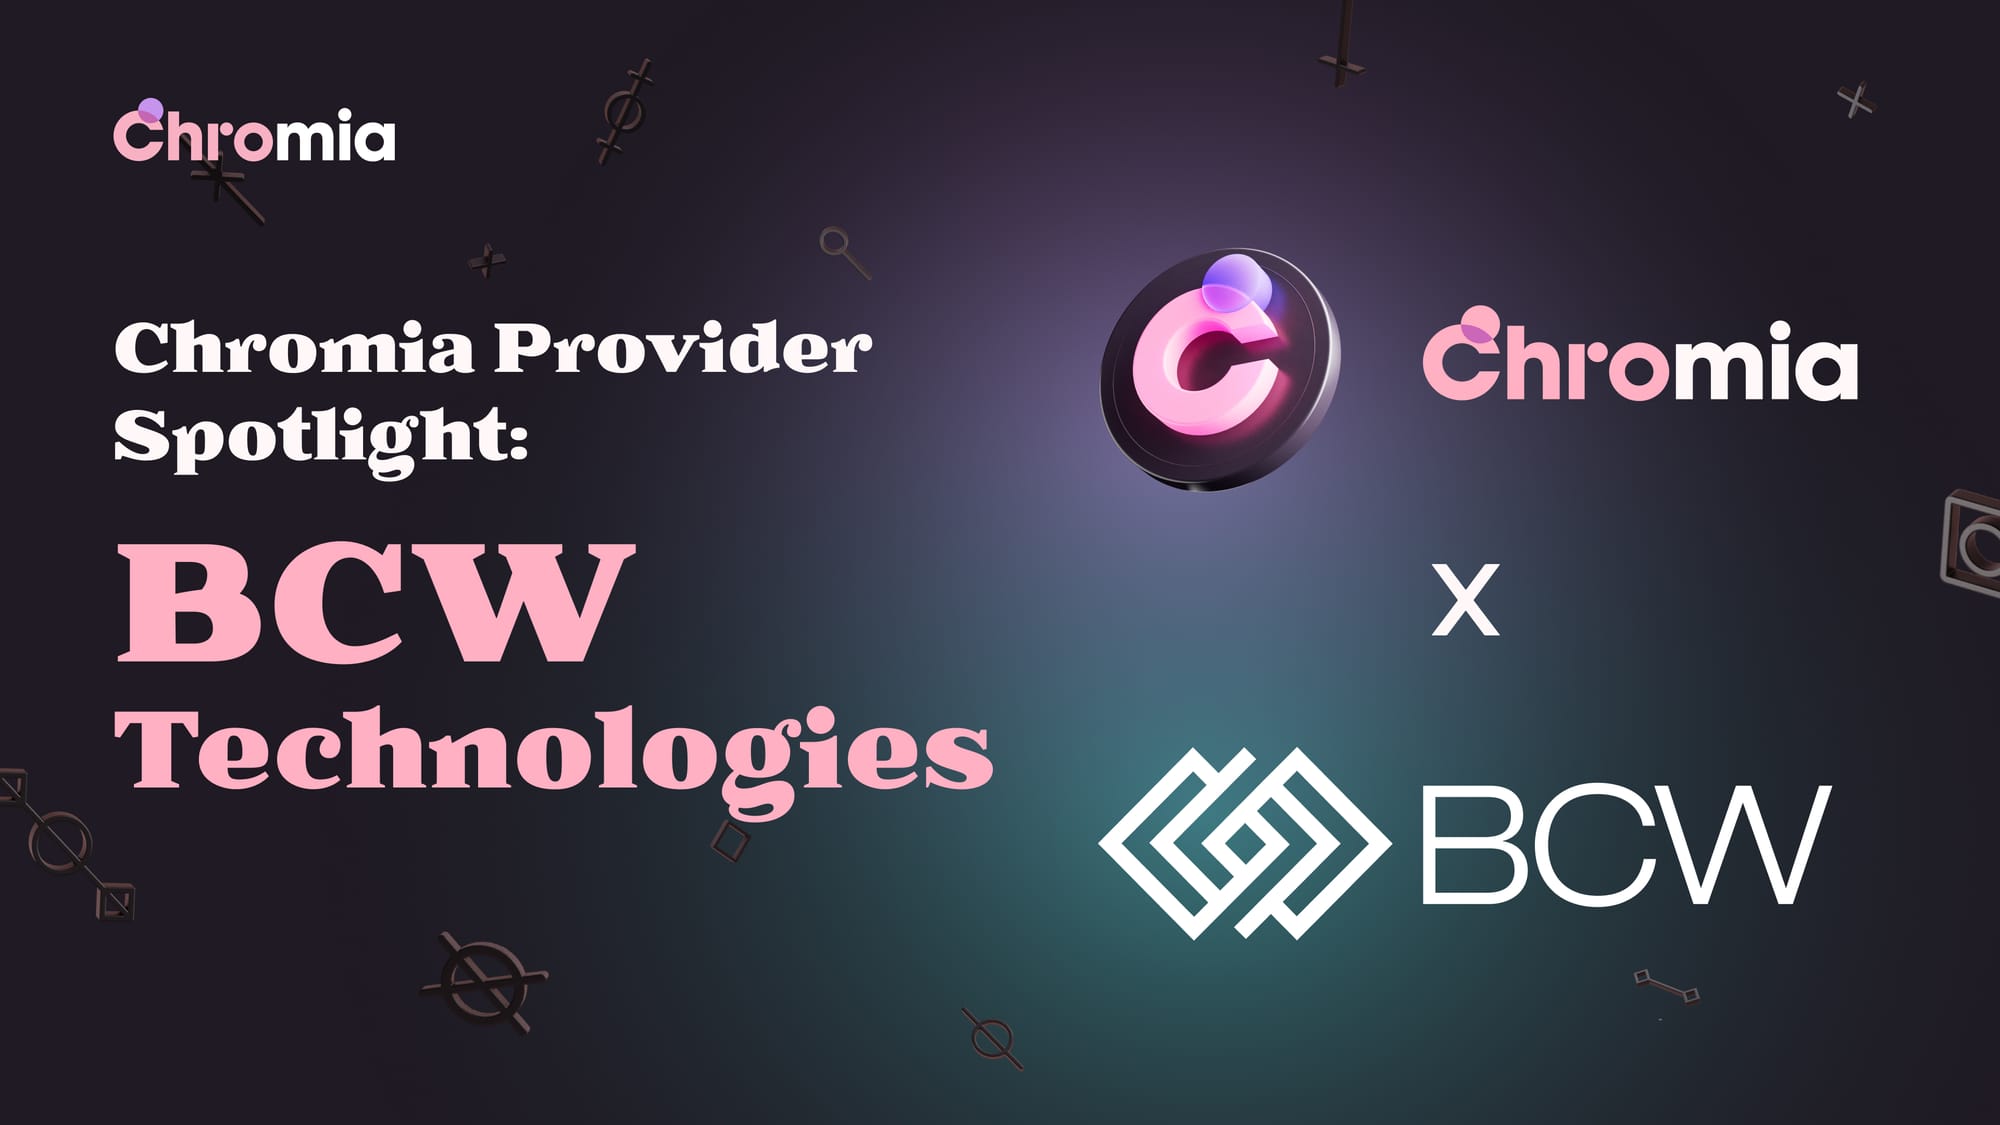 Chromia Provider Spotlight: BCW Technologies